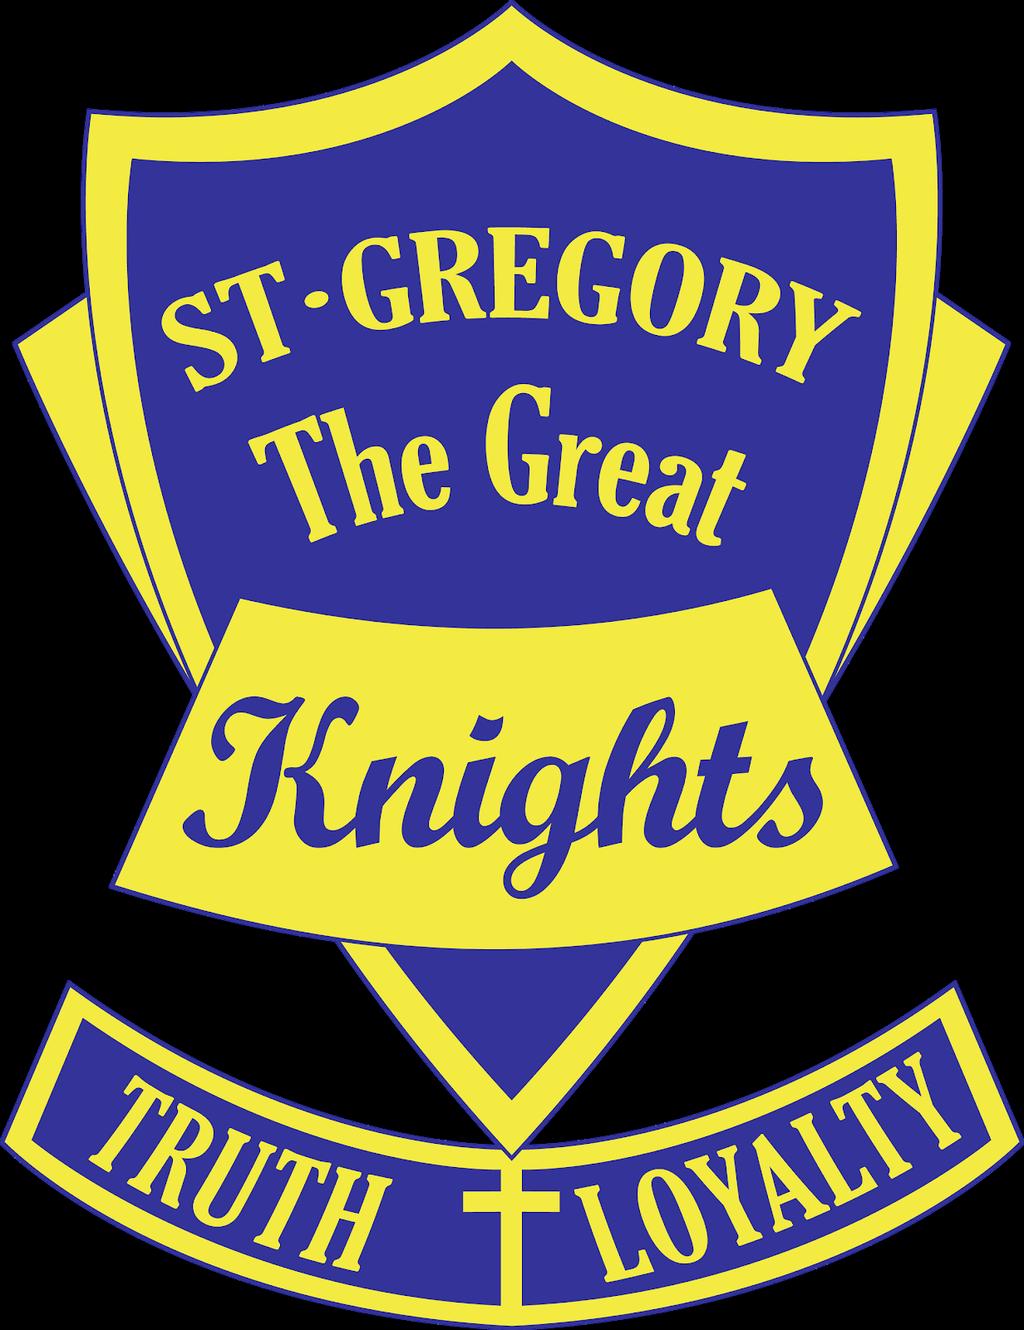 St. Gregory the Great School Newsletter APRIL 2018 VOLUME 1, NUMBER 1 Dear Parents Mission St.